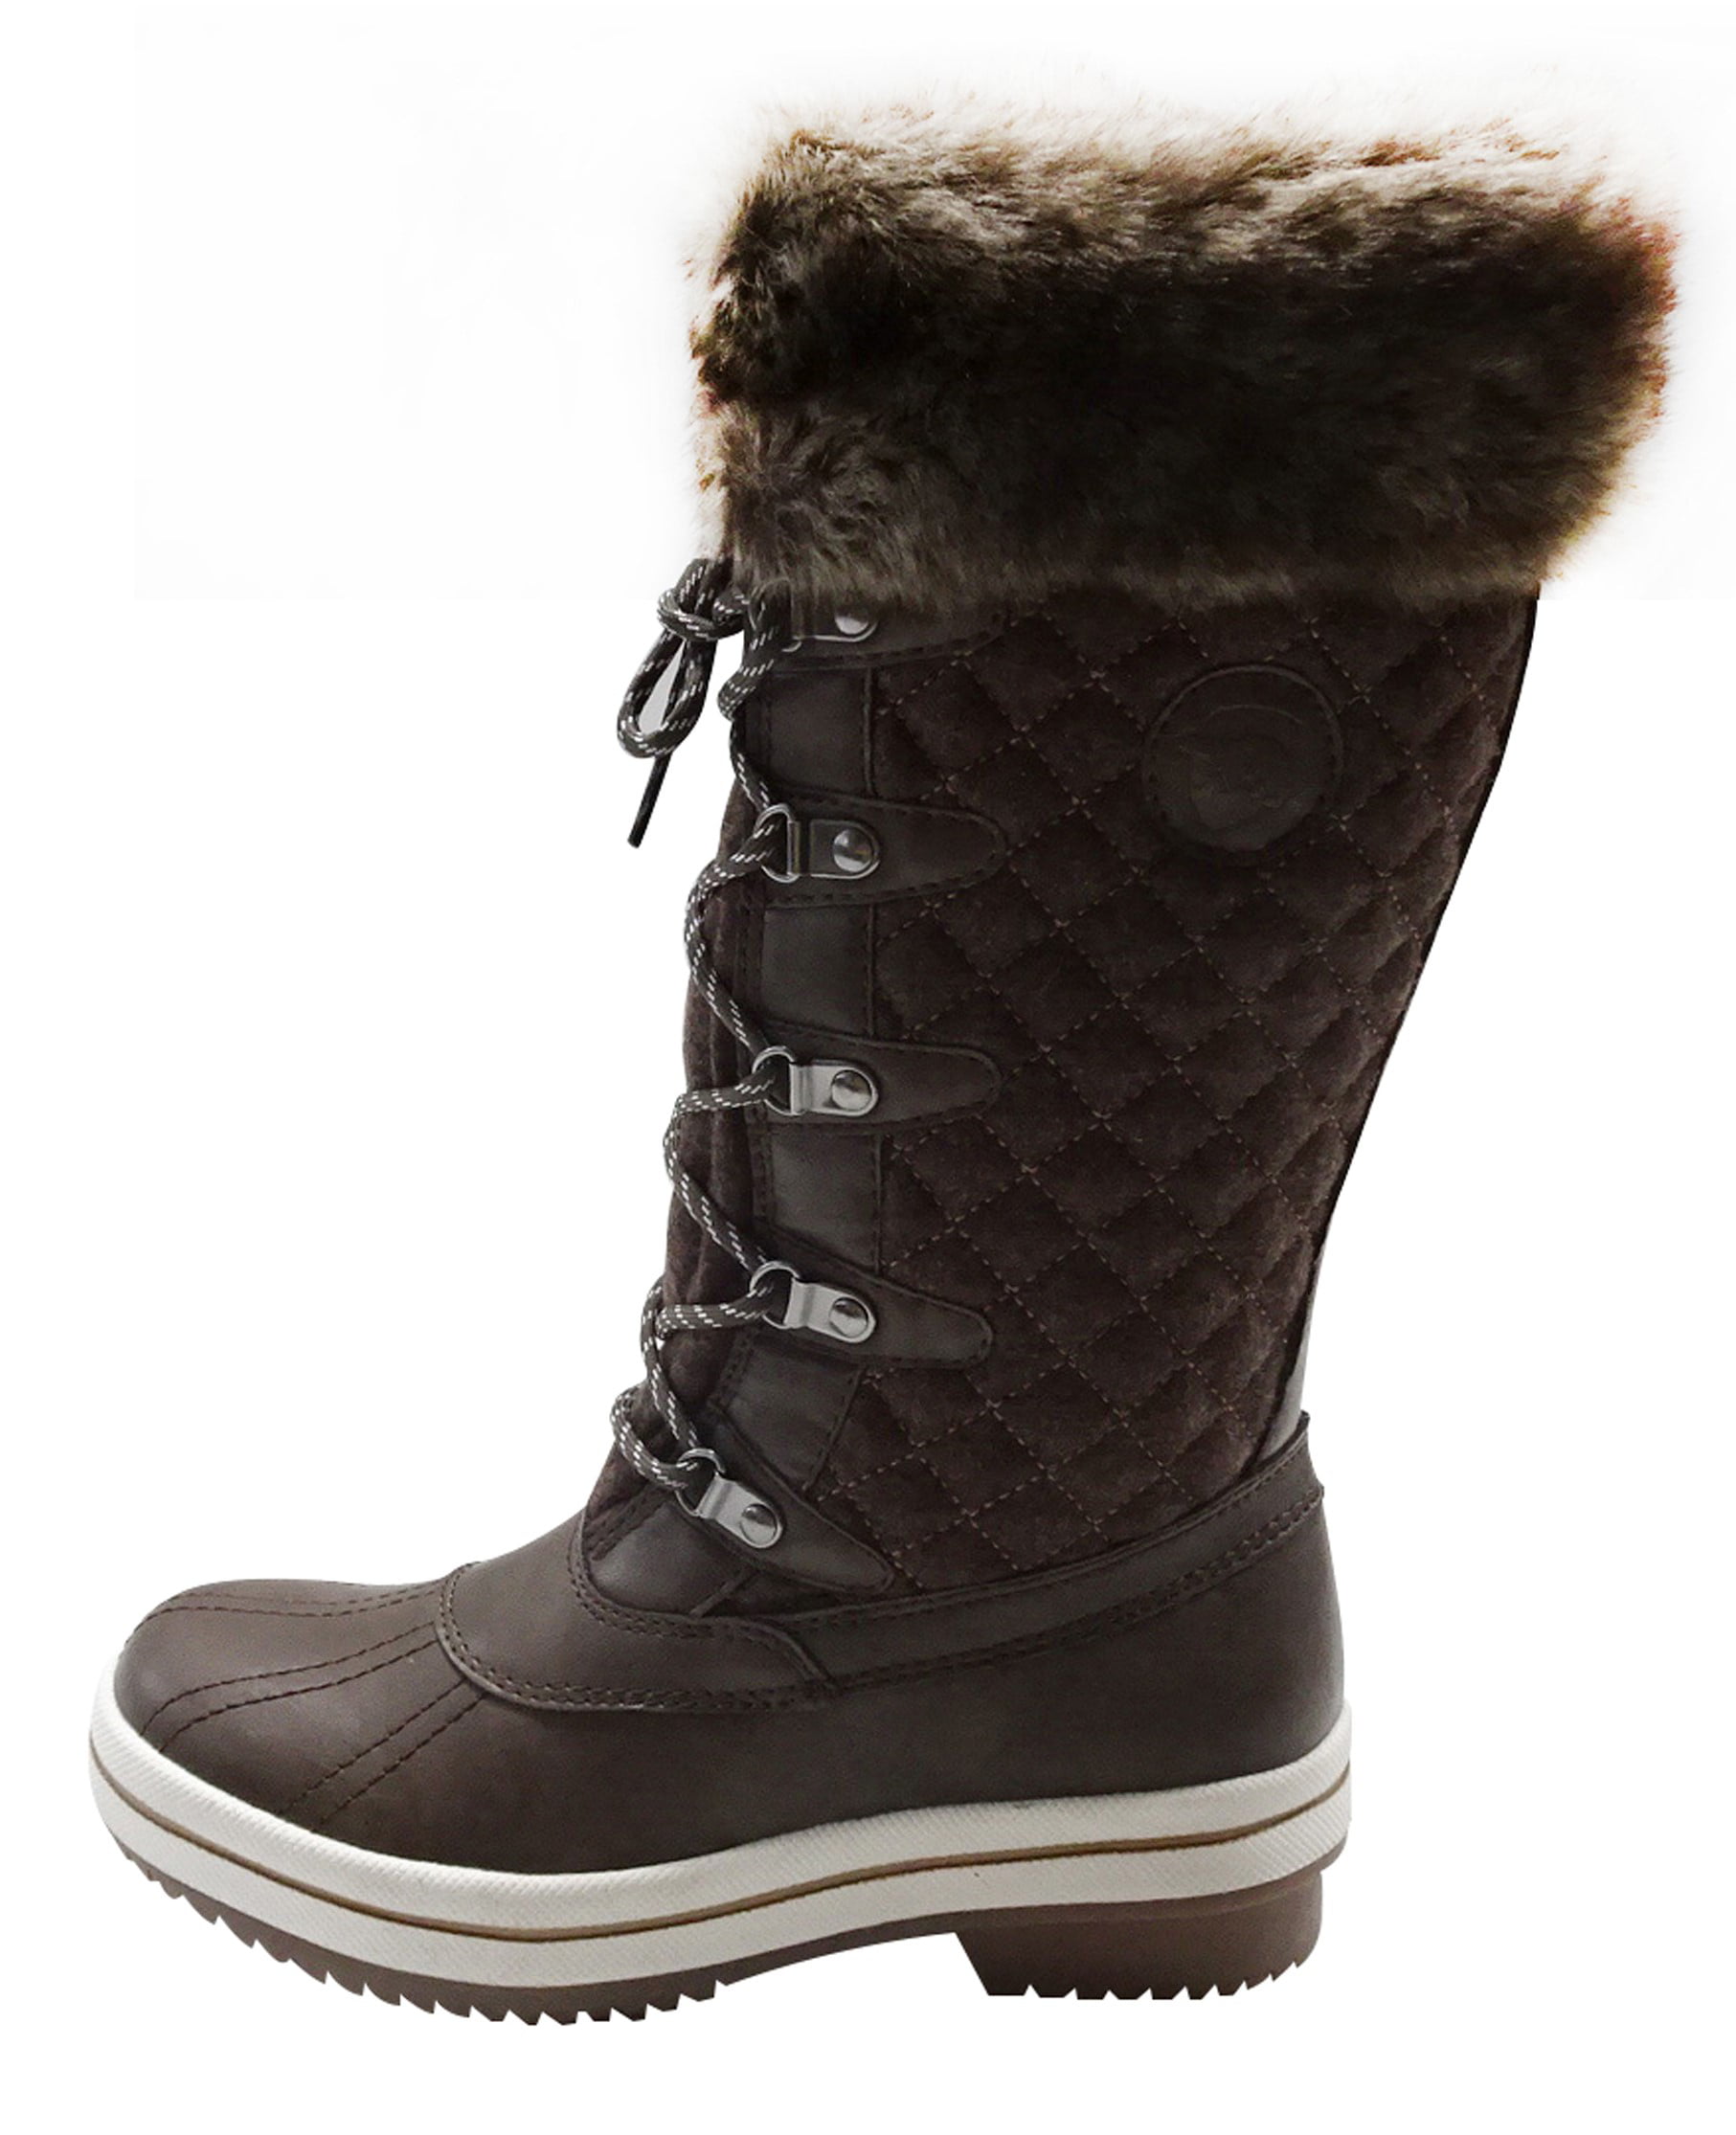 arctic shield women's snow boots